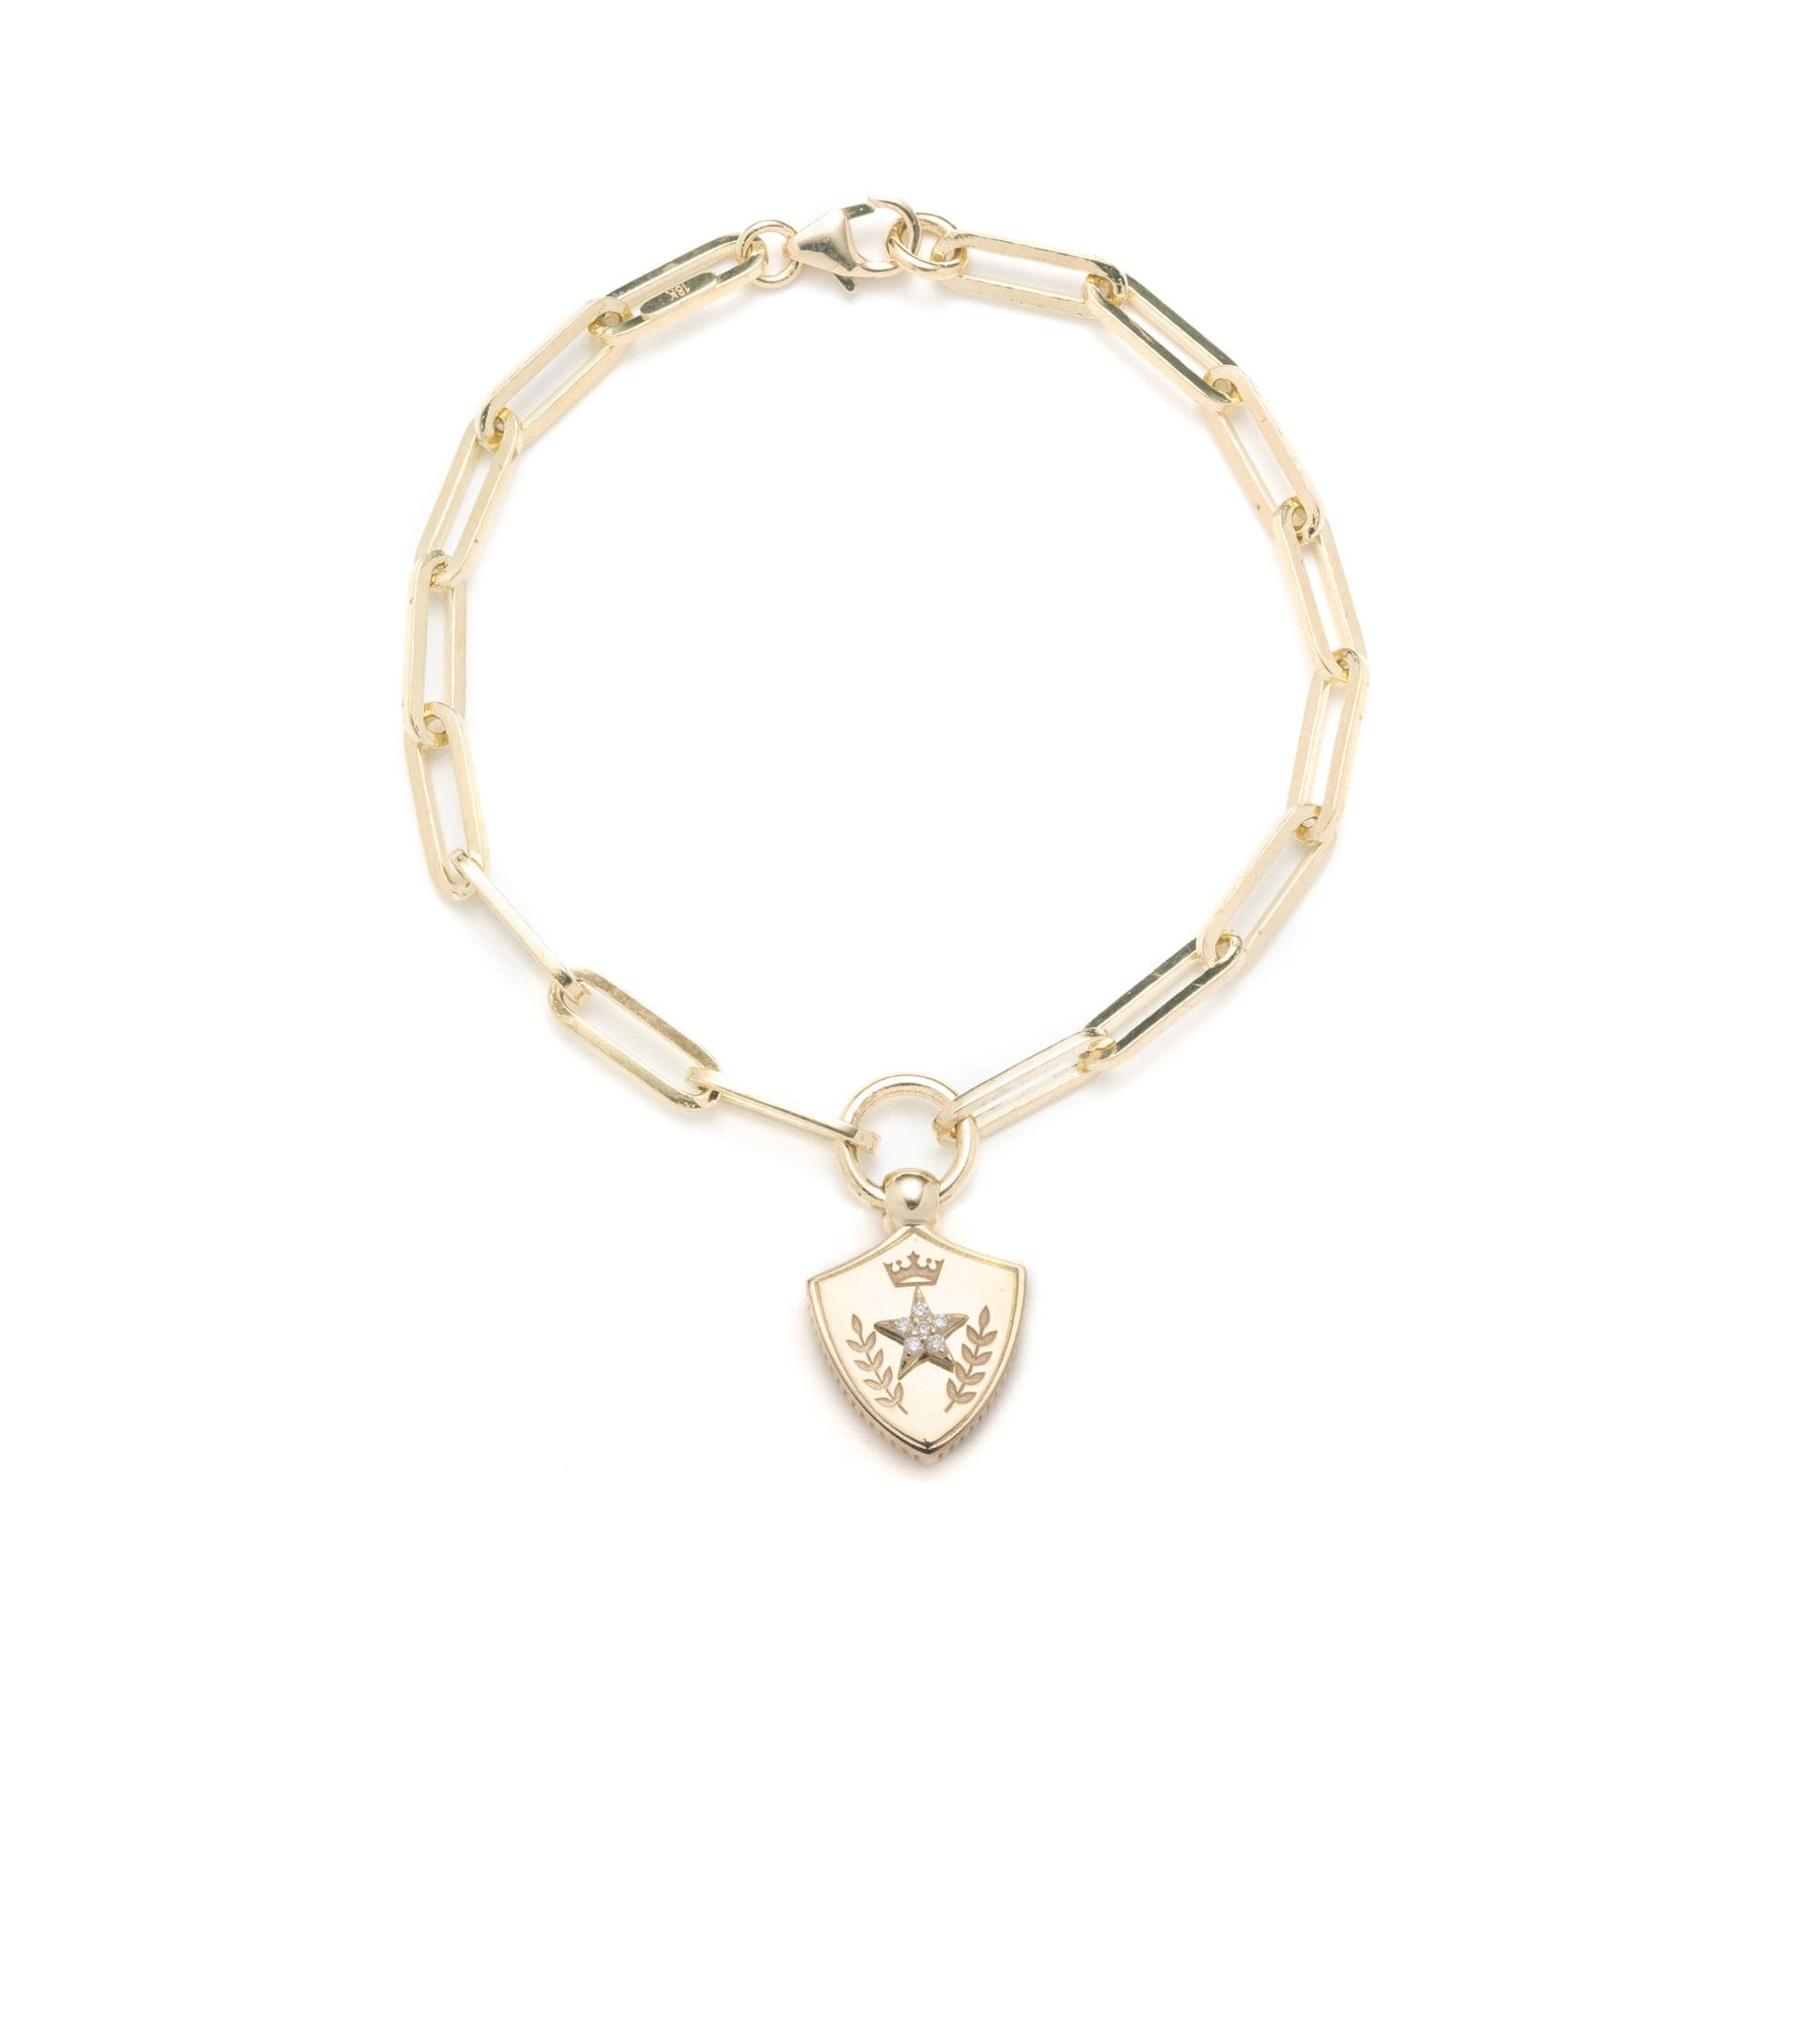 Louis Vuitton 18K Diamond Lockit Bracelet - 18K White Gold Bangle